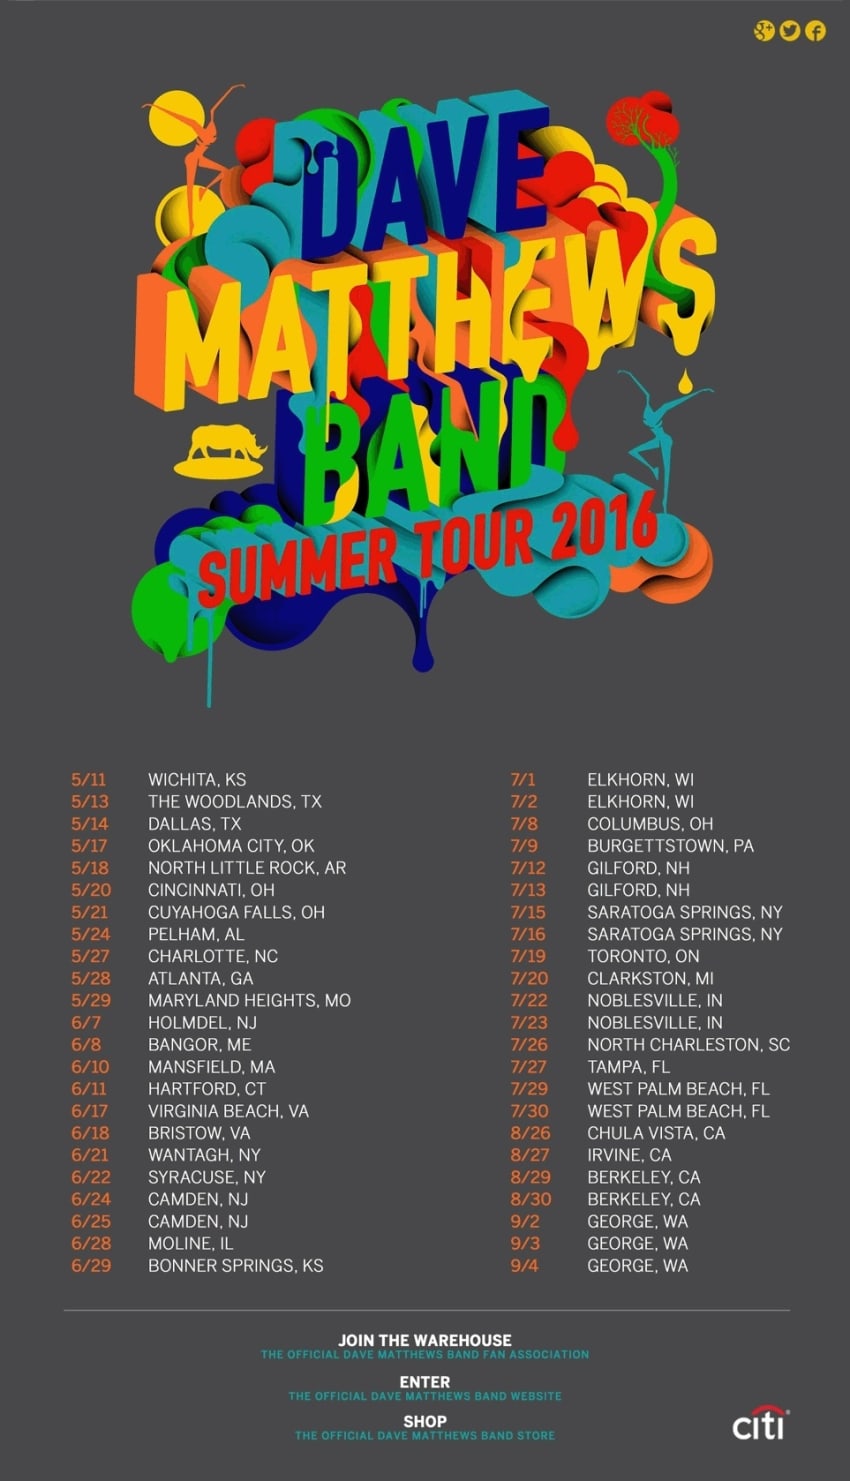 dmband tour dates